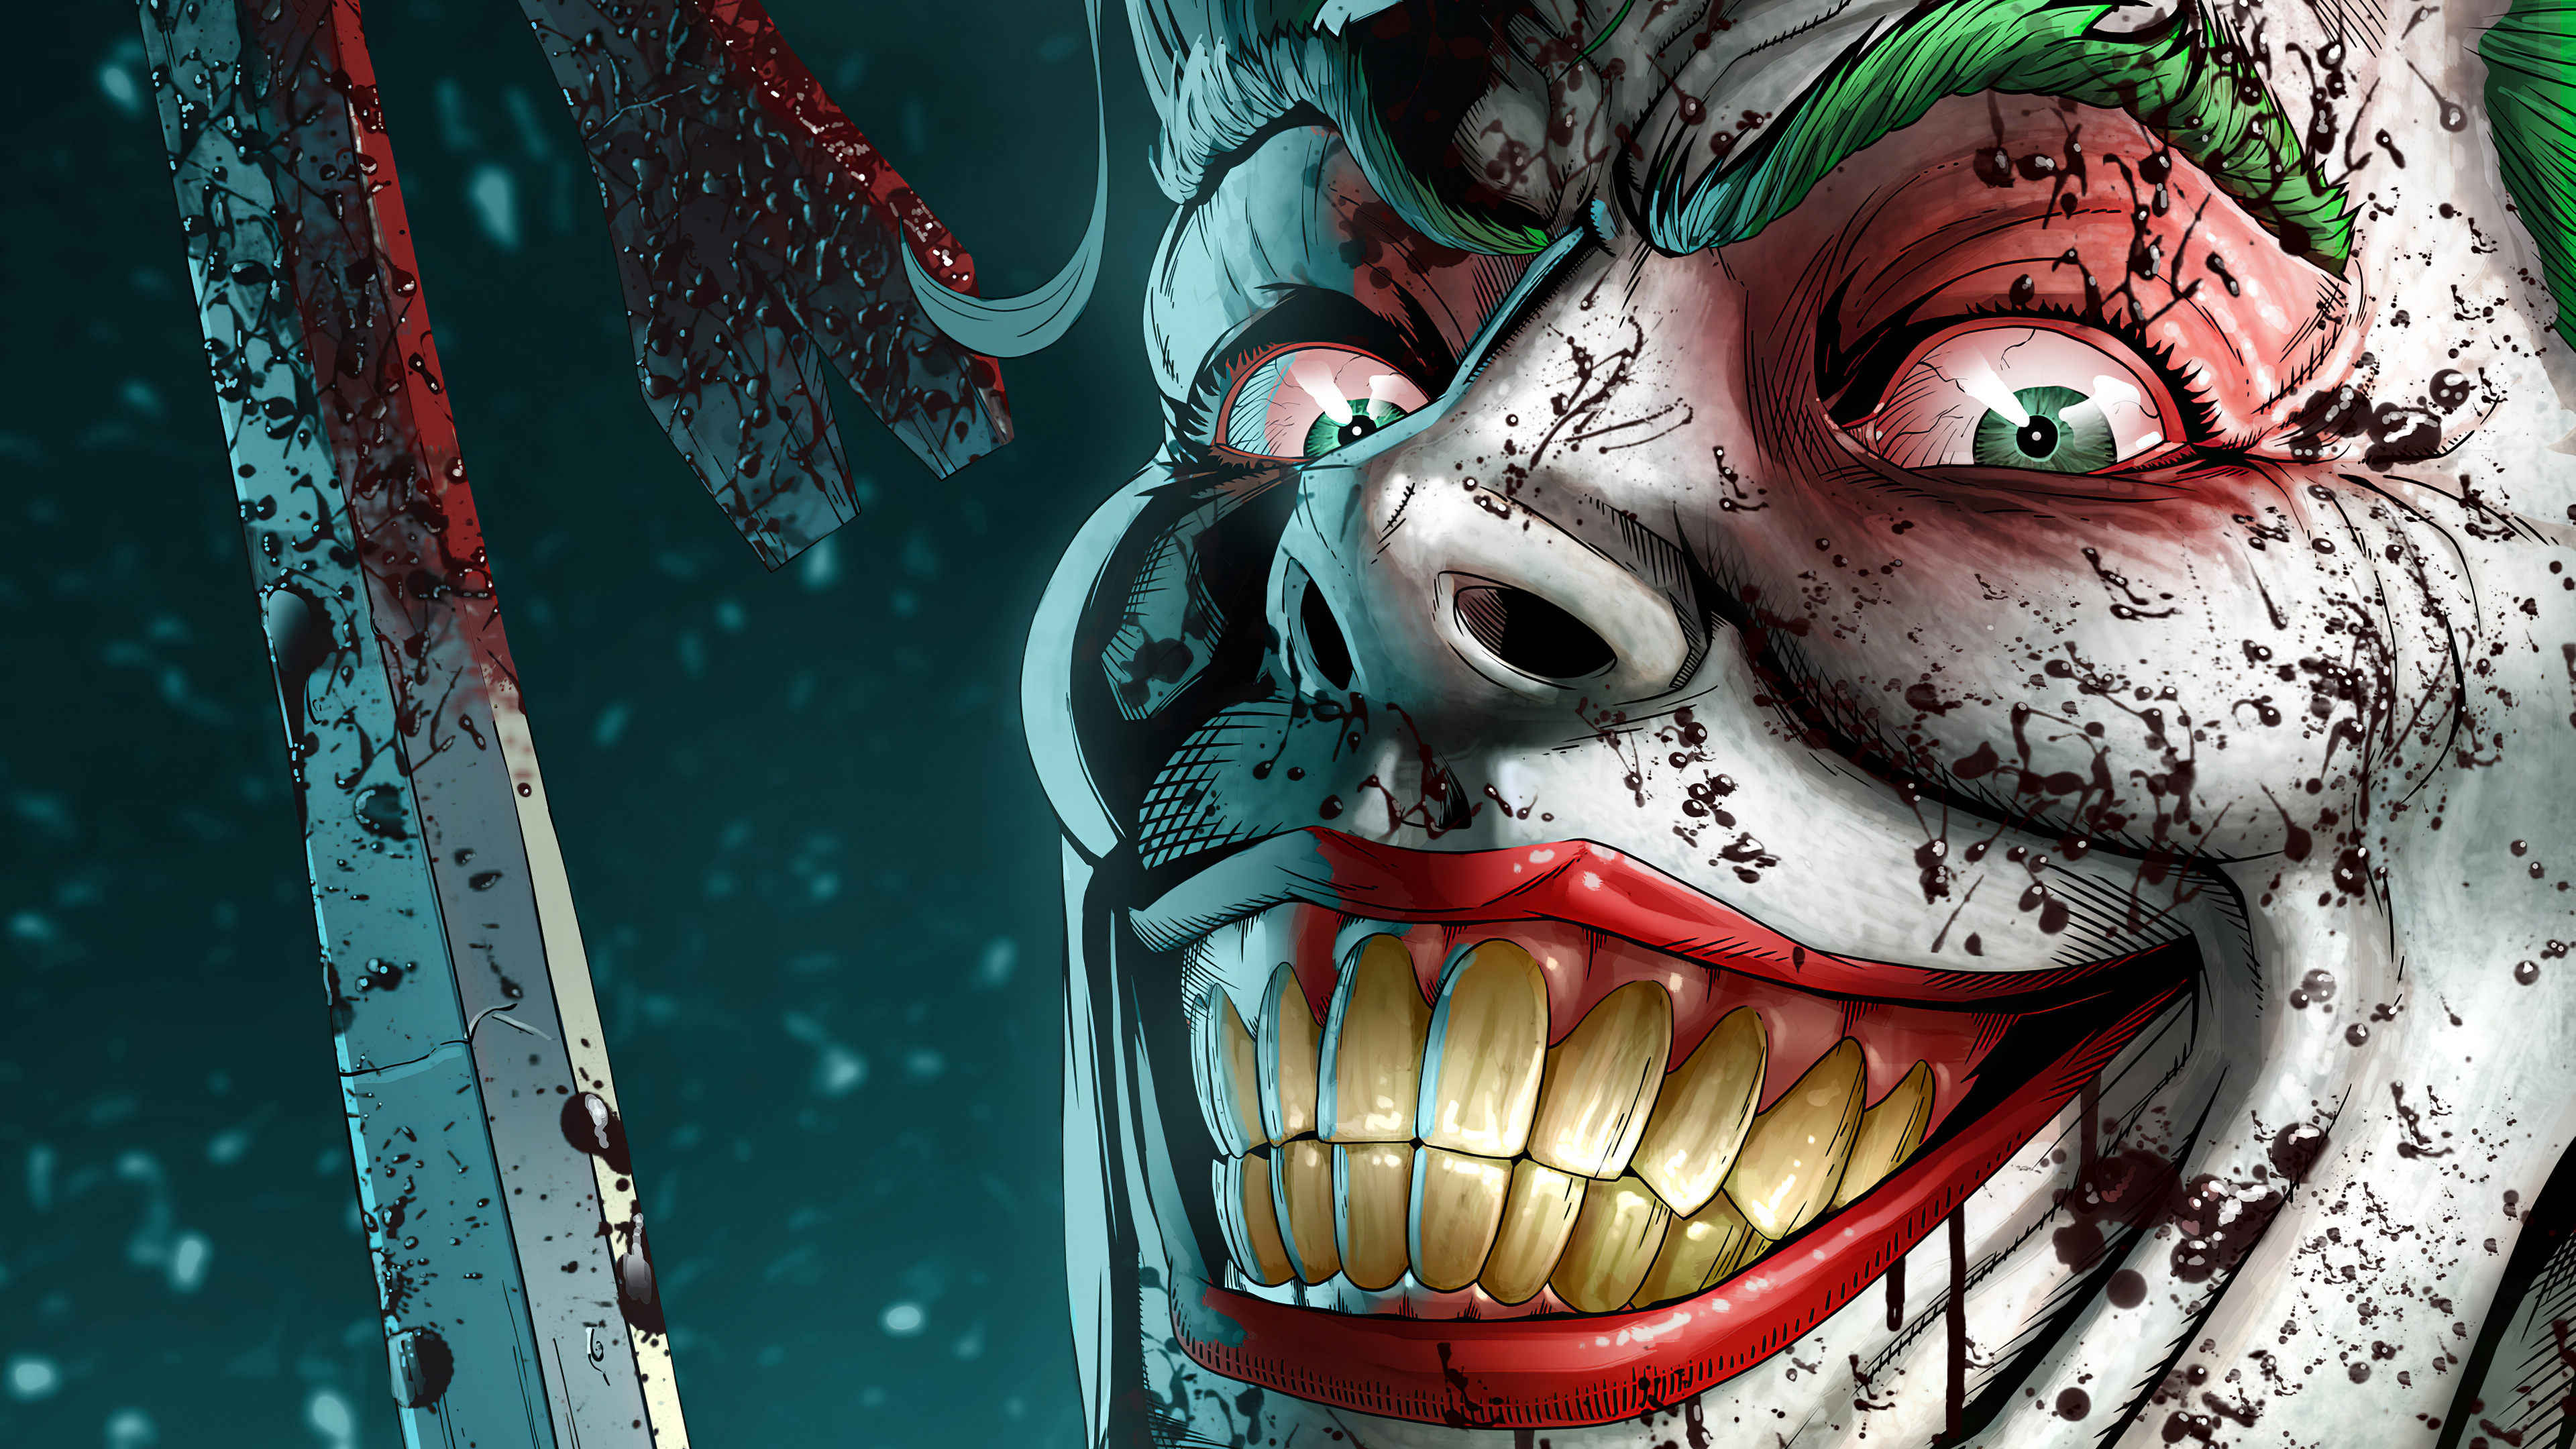 Comics Joker 4k Ultra HD Wallpaper by Alex Trpcevski